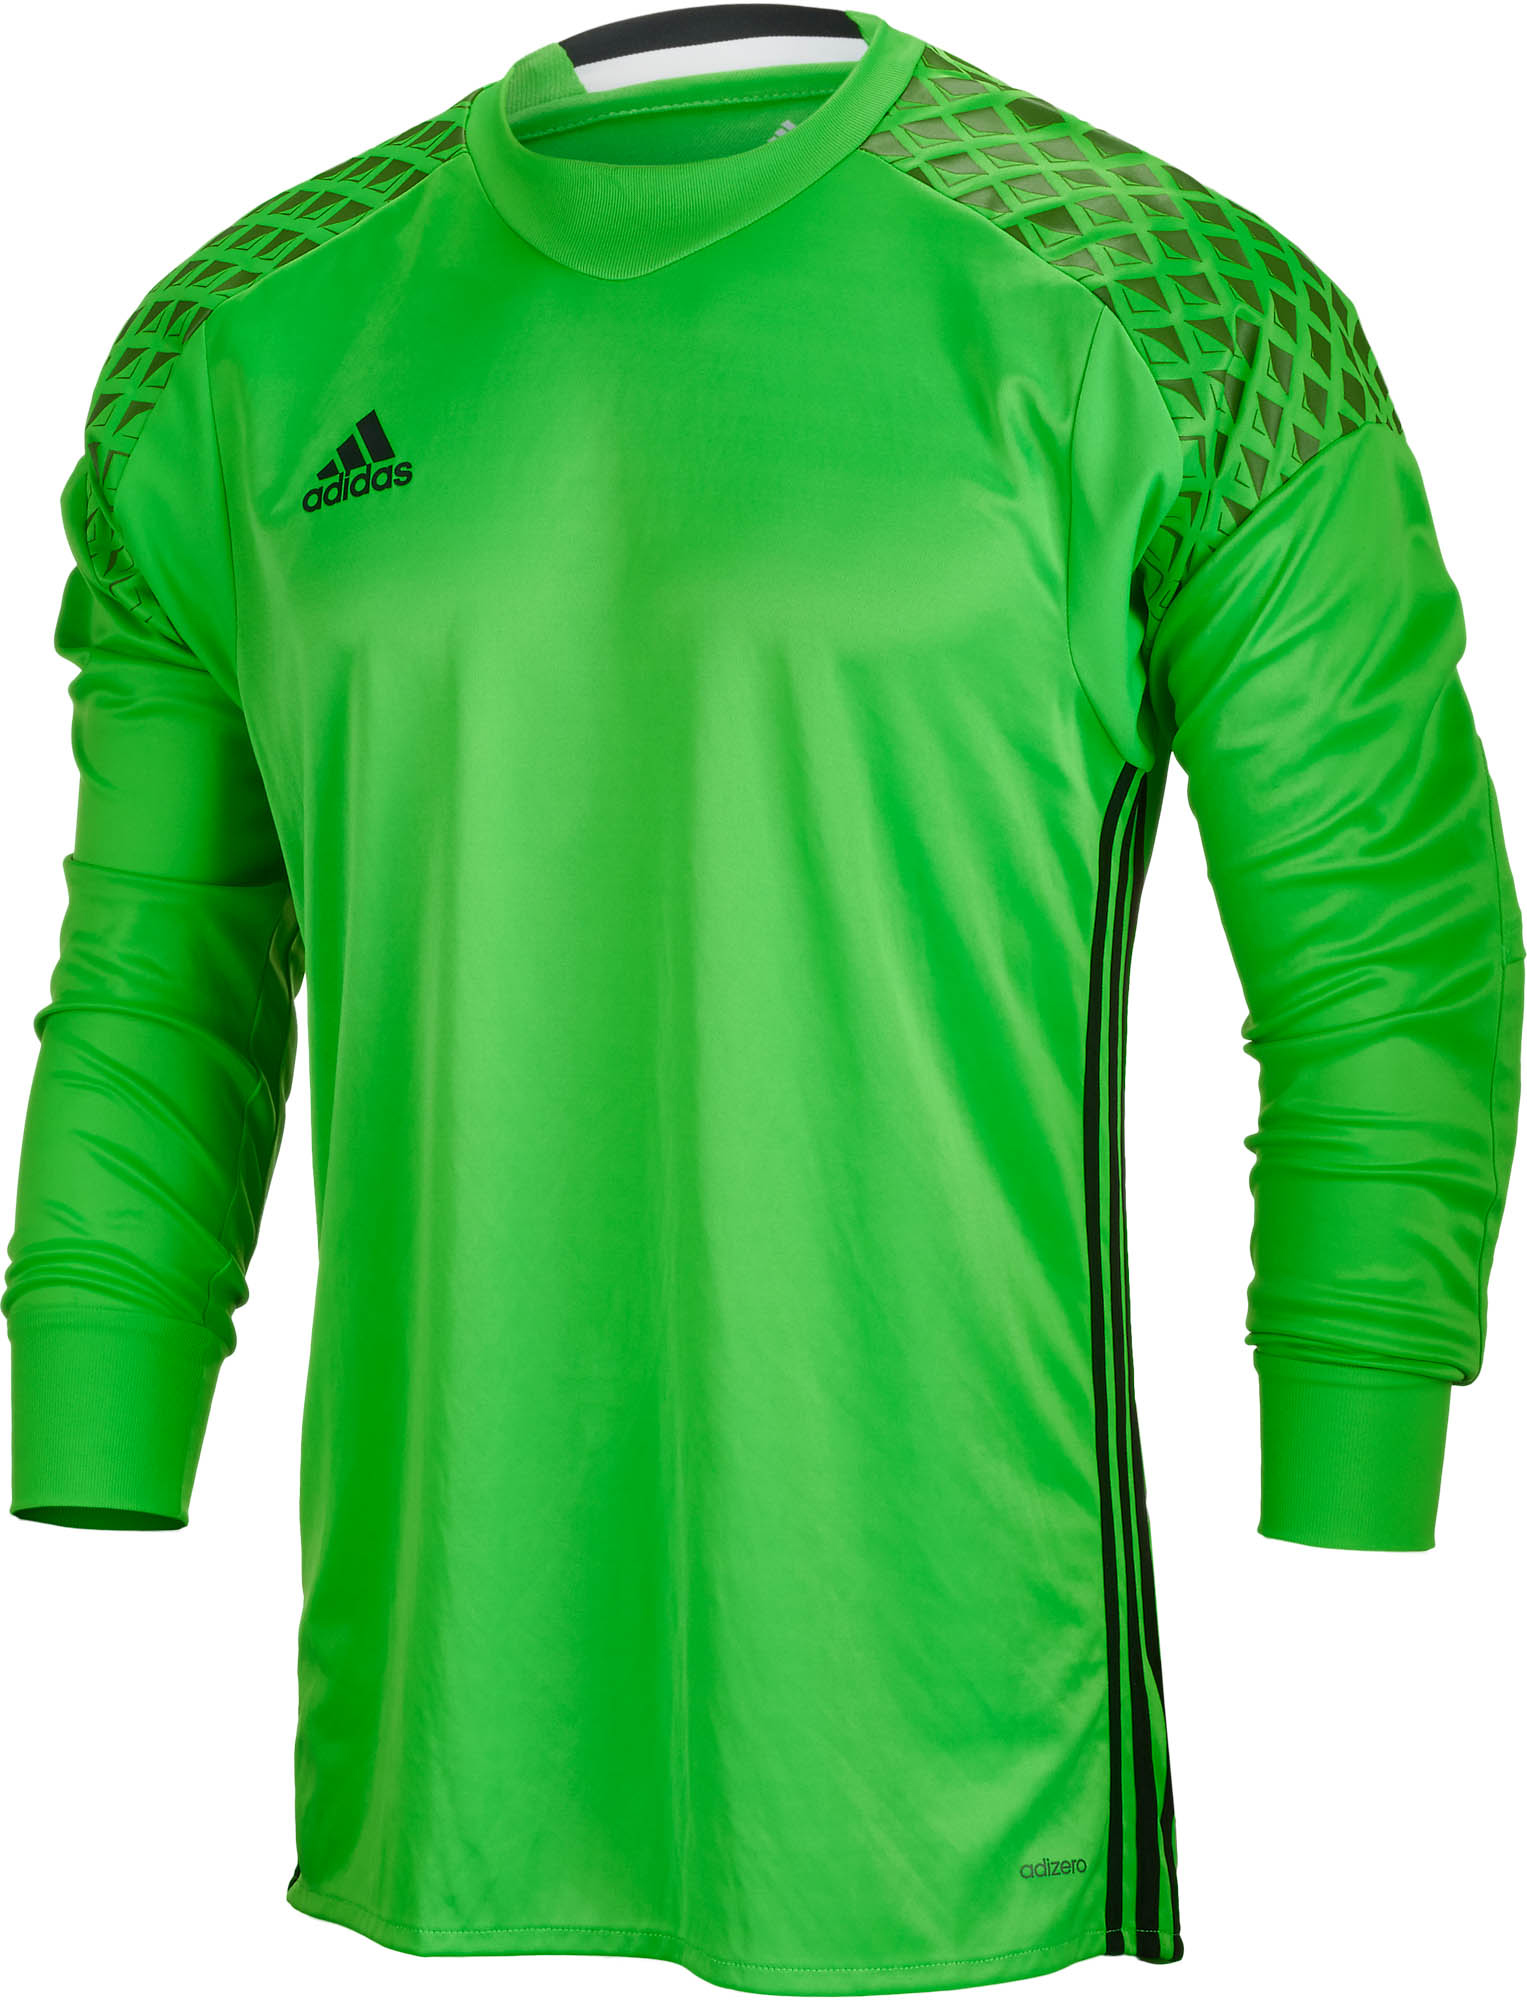 adidas women's goalkeeper jersey Off 63% - www.bashhguidelines.org